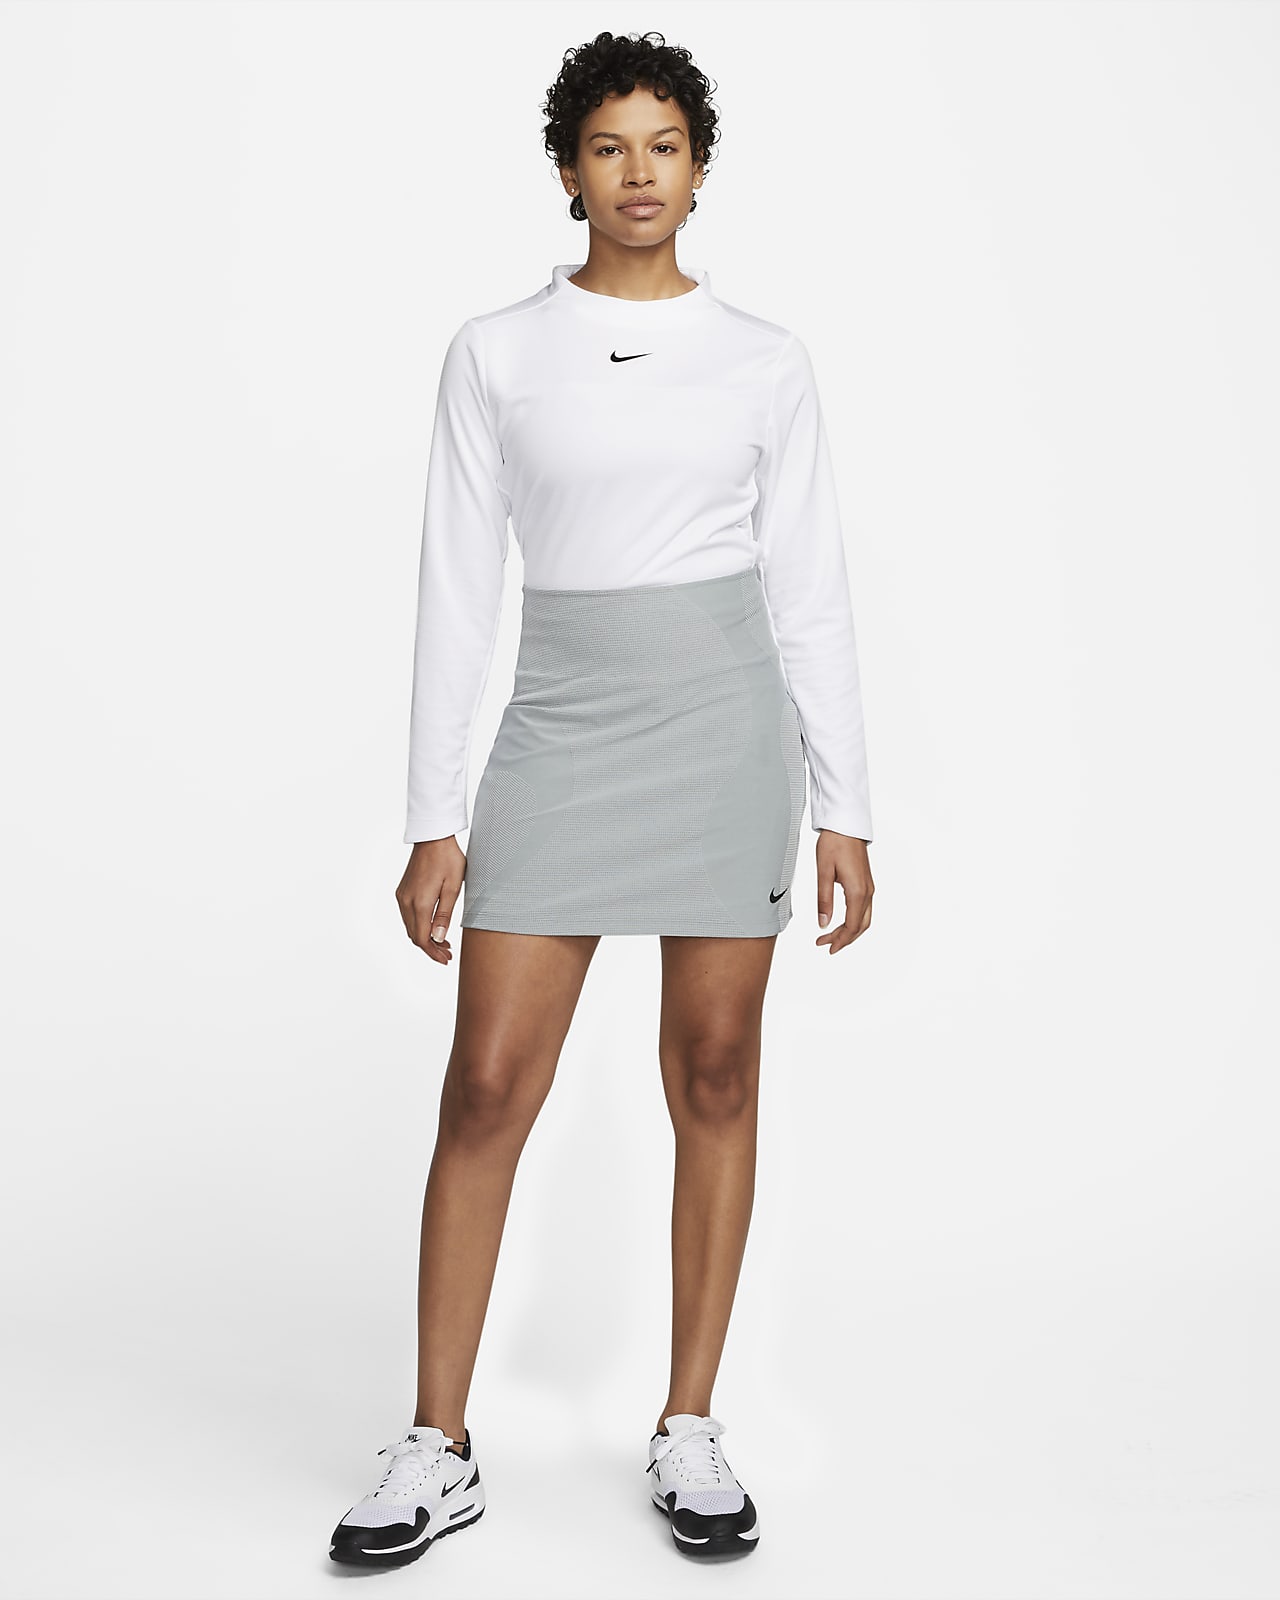 Geologie ontrouw focus Nike Dri-FIT UV Tour Women's Golf Skirt. Nike.com